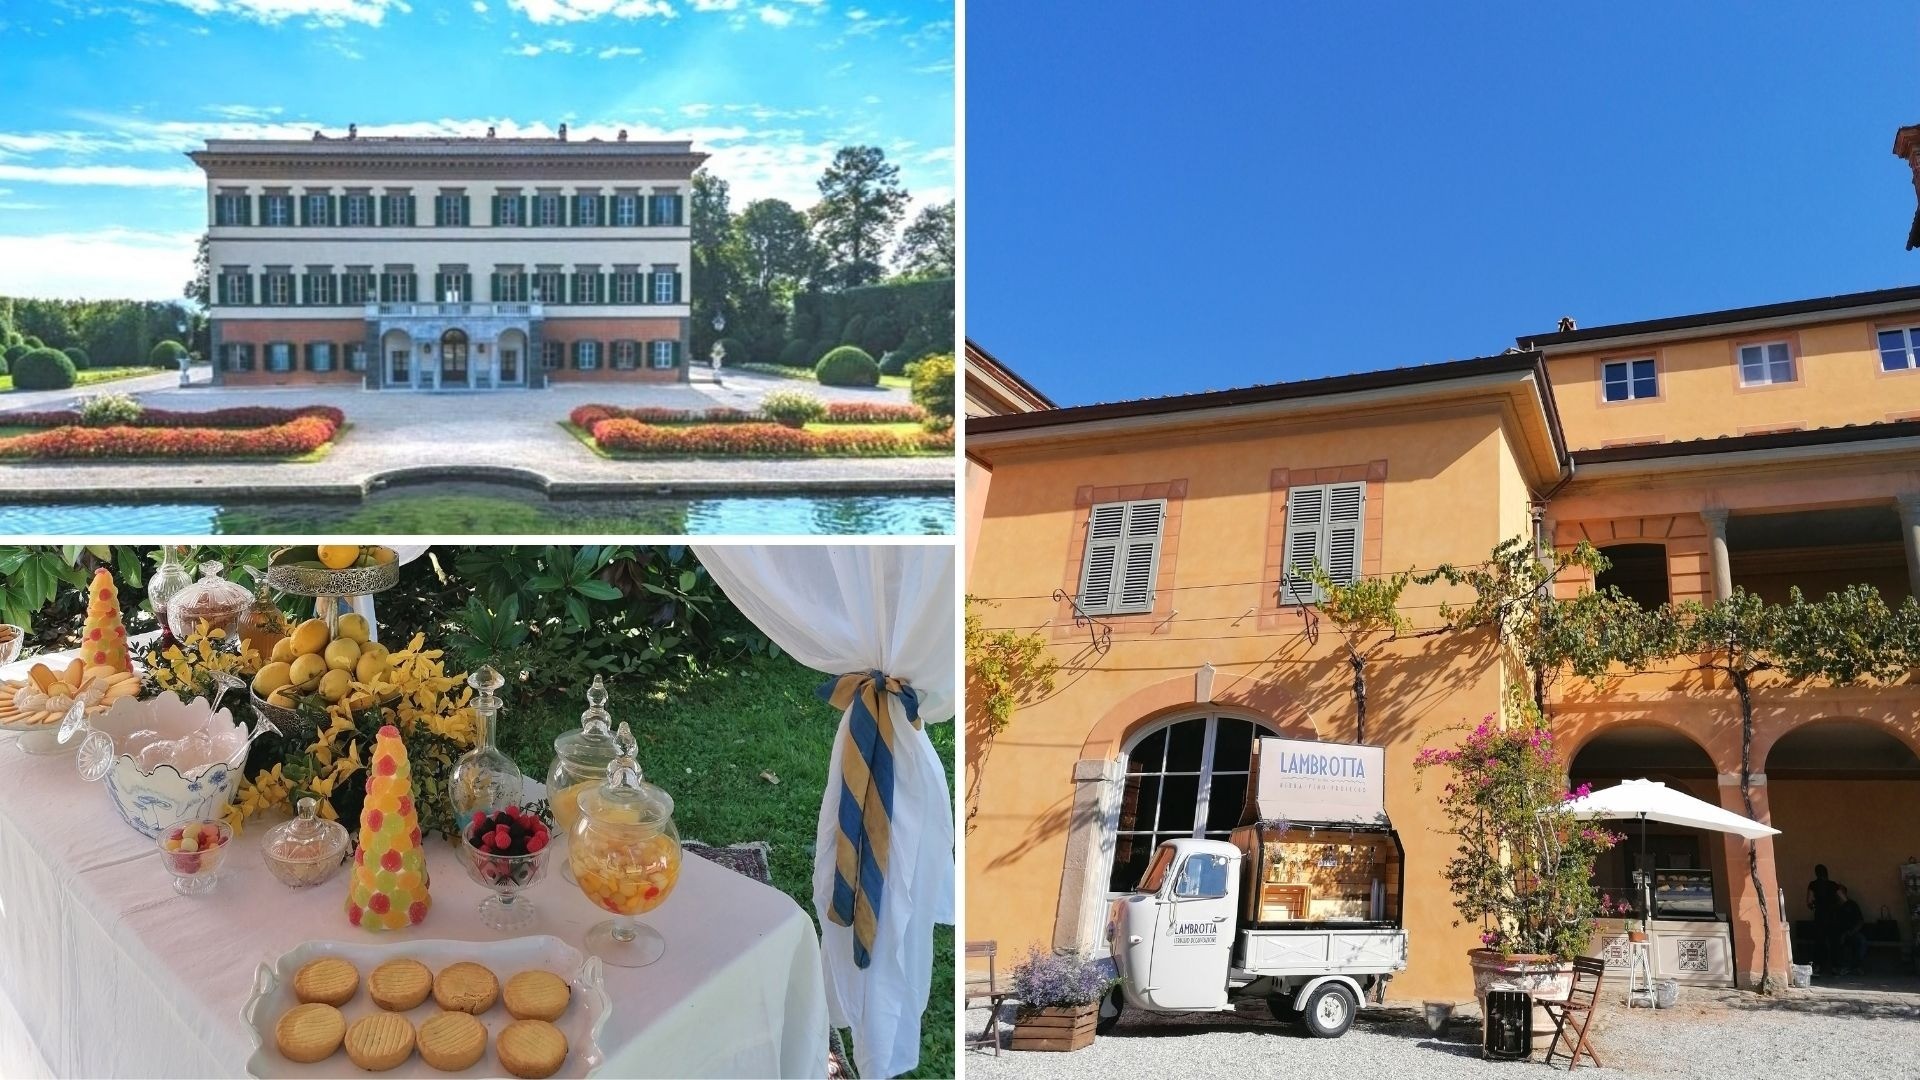 Catering service in a prestigious villa in the Tuscan countryside